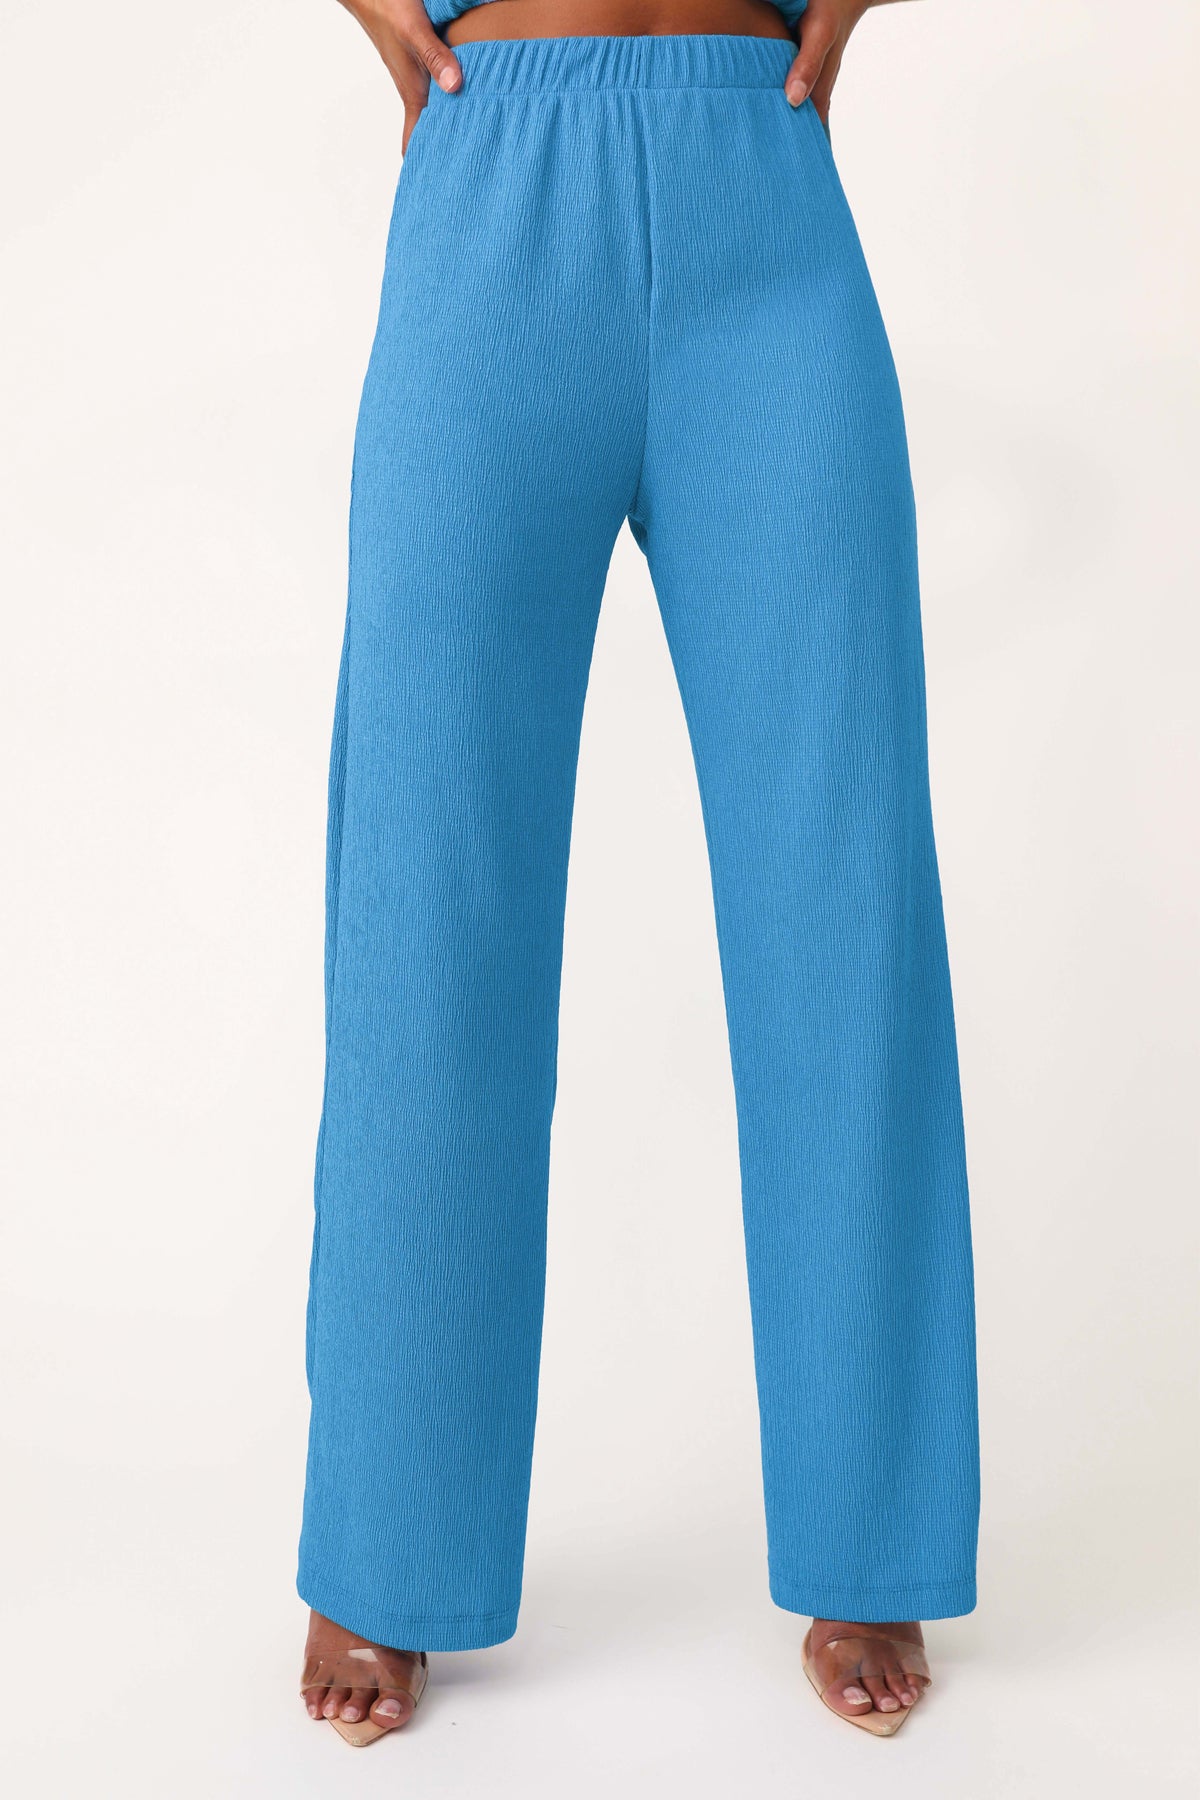  Model wearing the Liber-Tea blue pant.